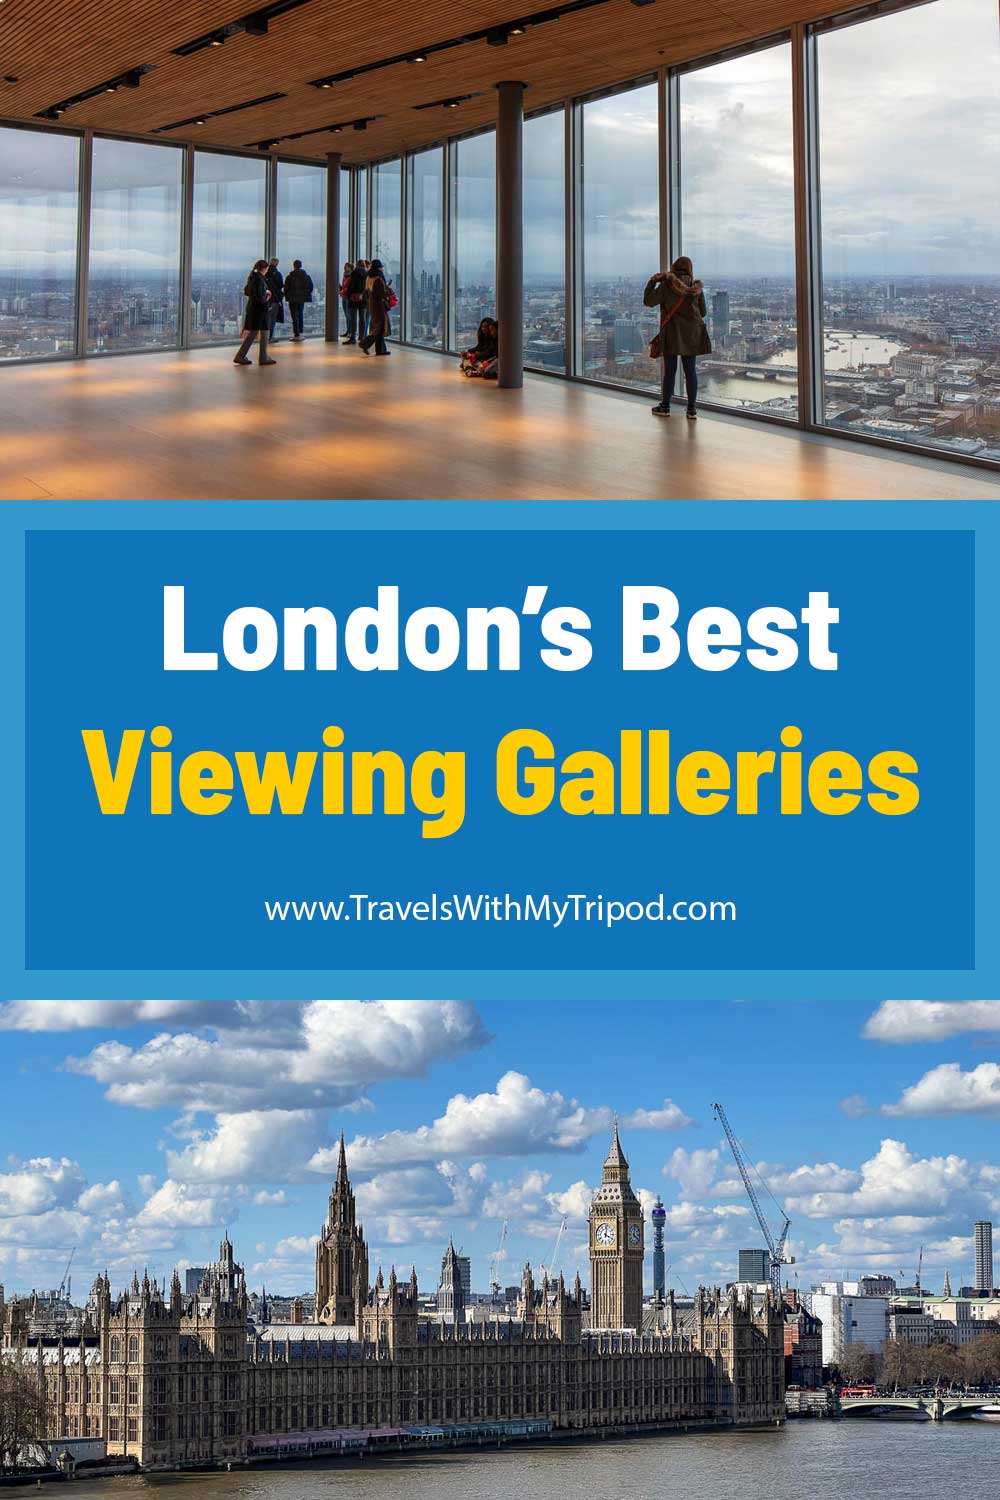 London's Best Viewing Galleries